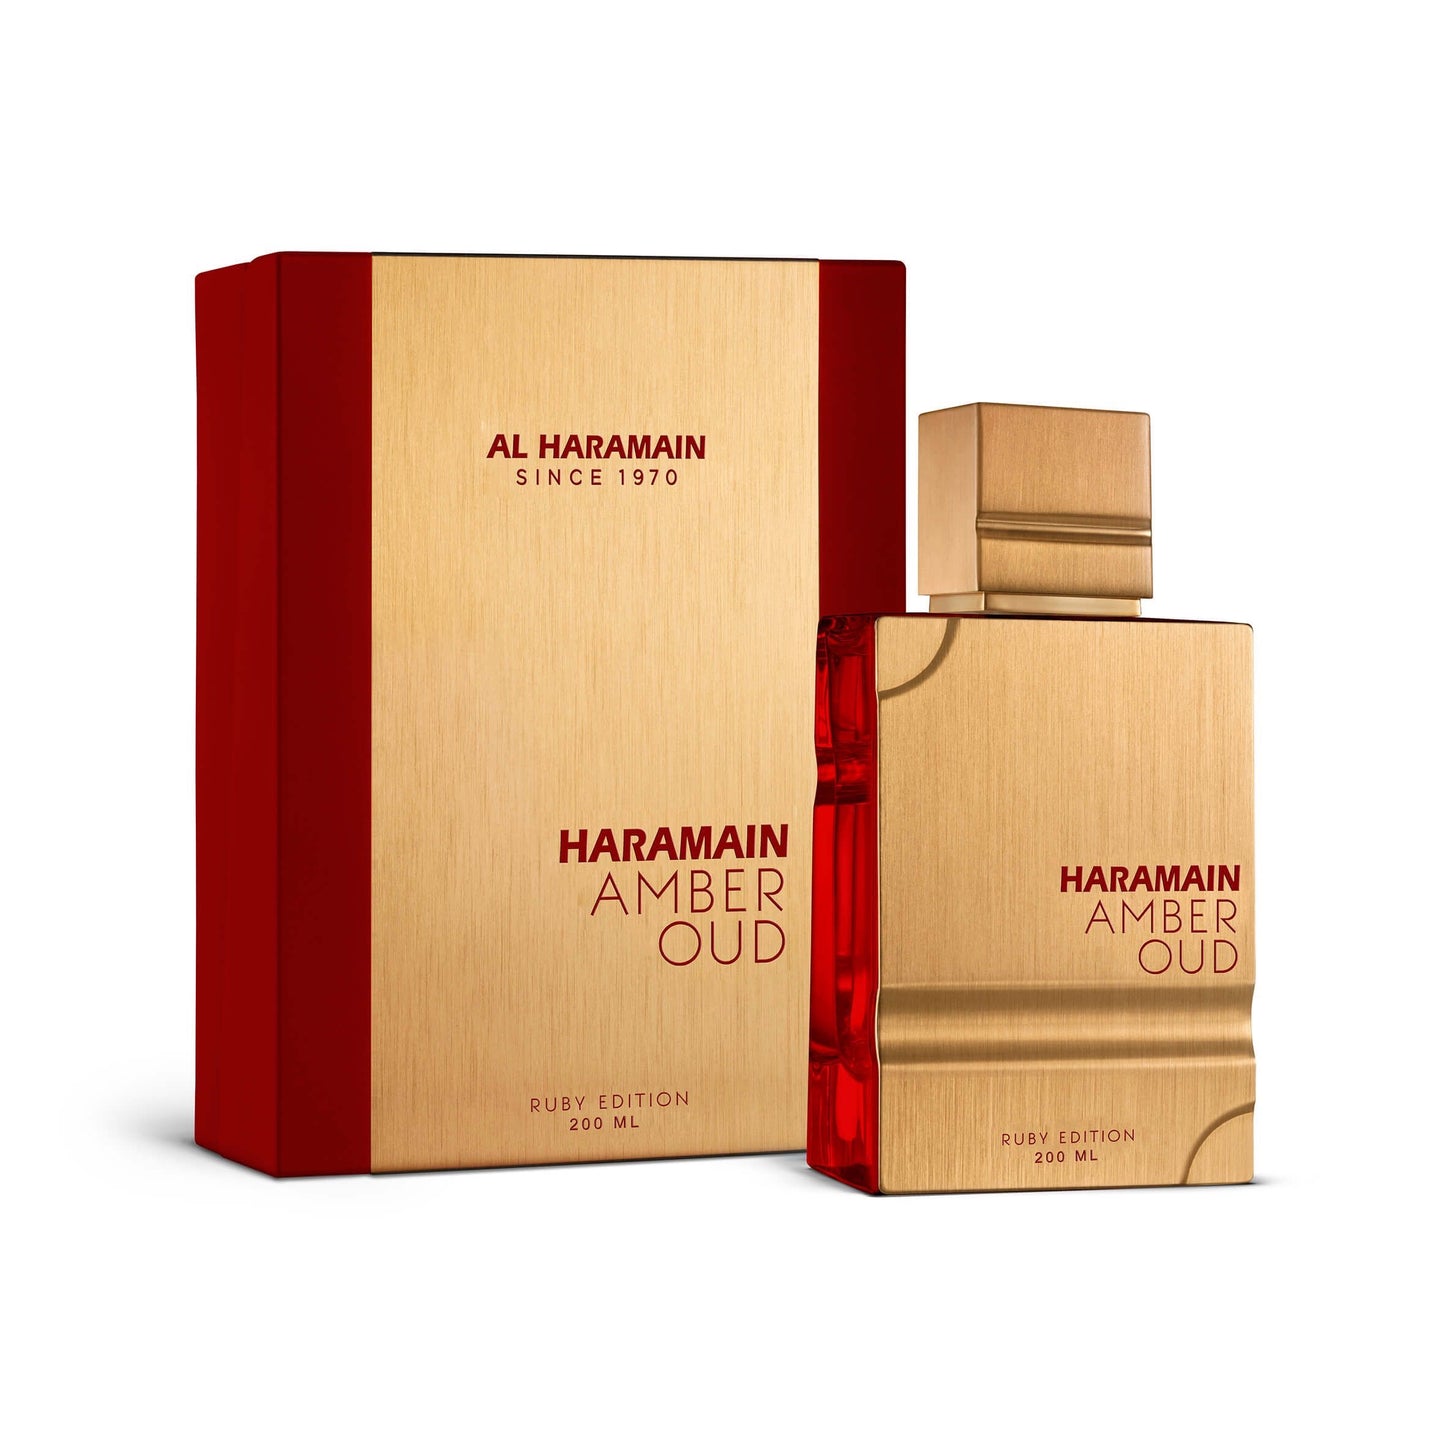 Haramain Amber Oud Ruby Edition, 200ml, Eau De Parfum